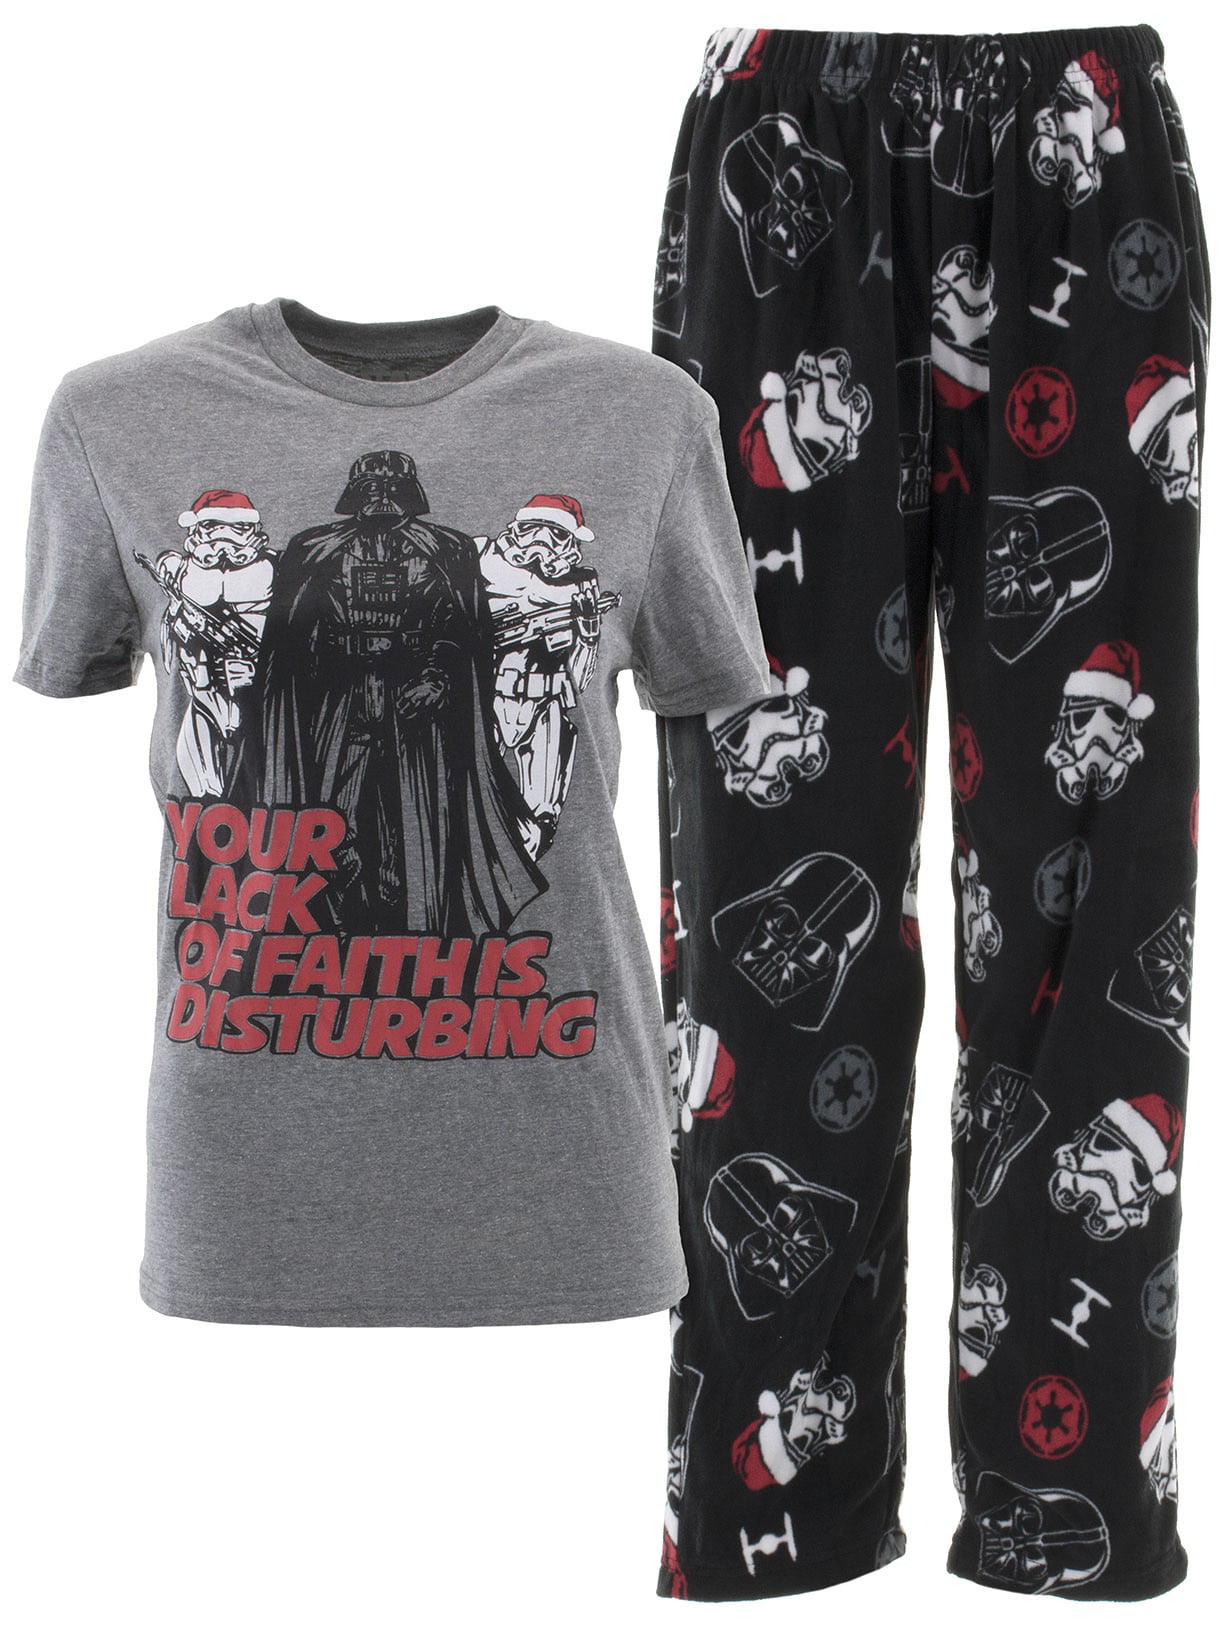 Star Wars Darth Vader PyjamasMens Star Wars Pyjama SetMens Darth Vader PJs